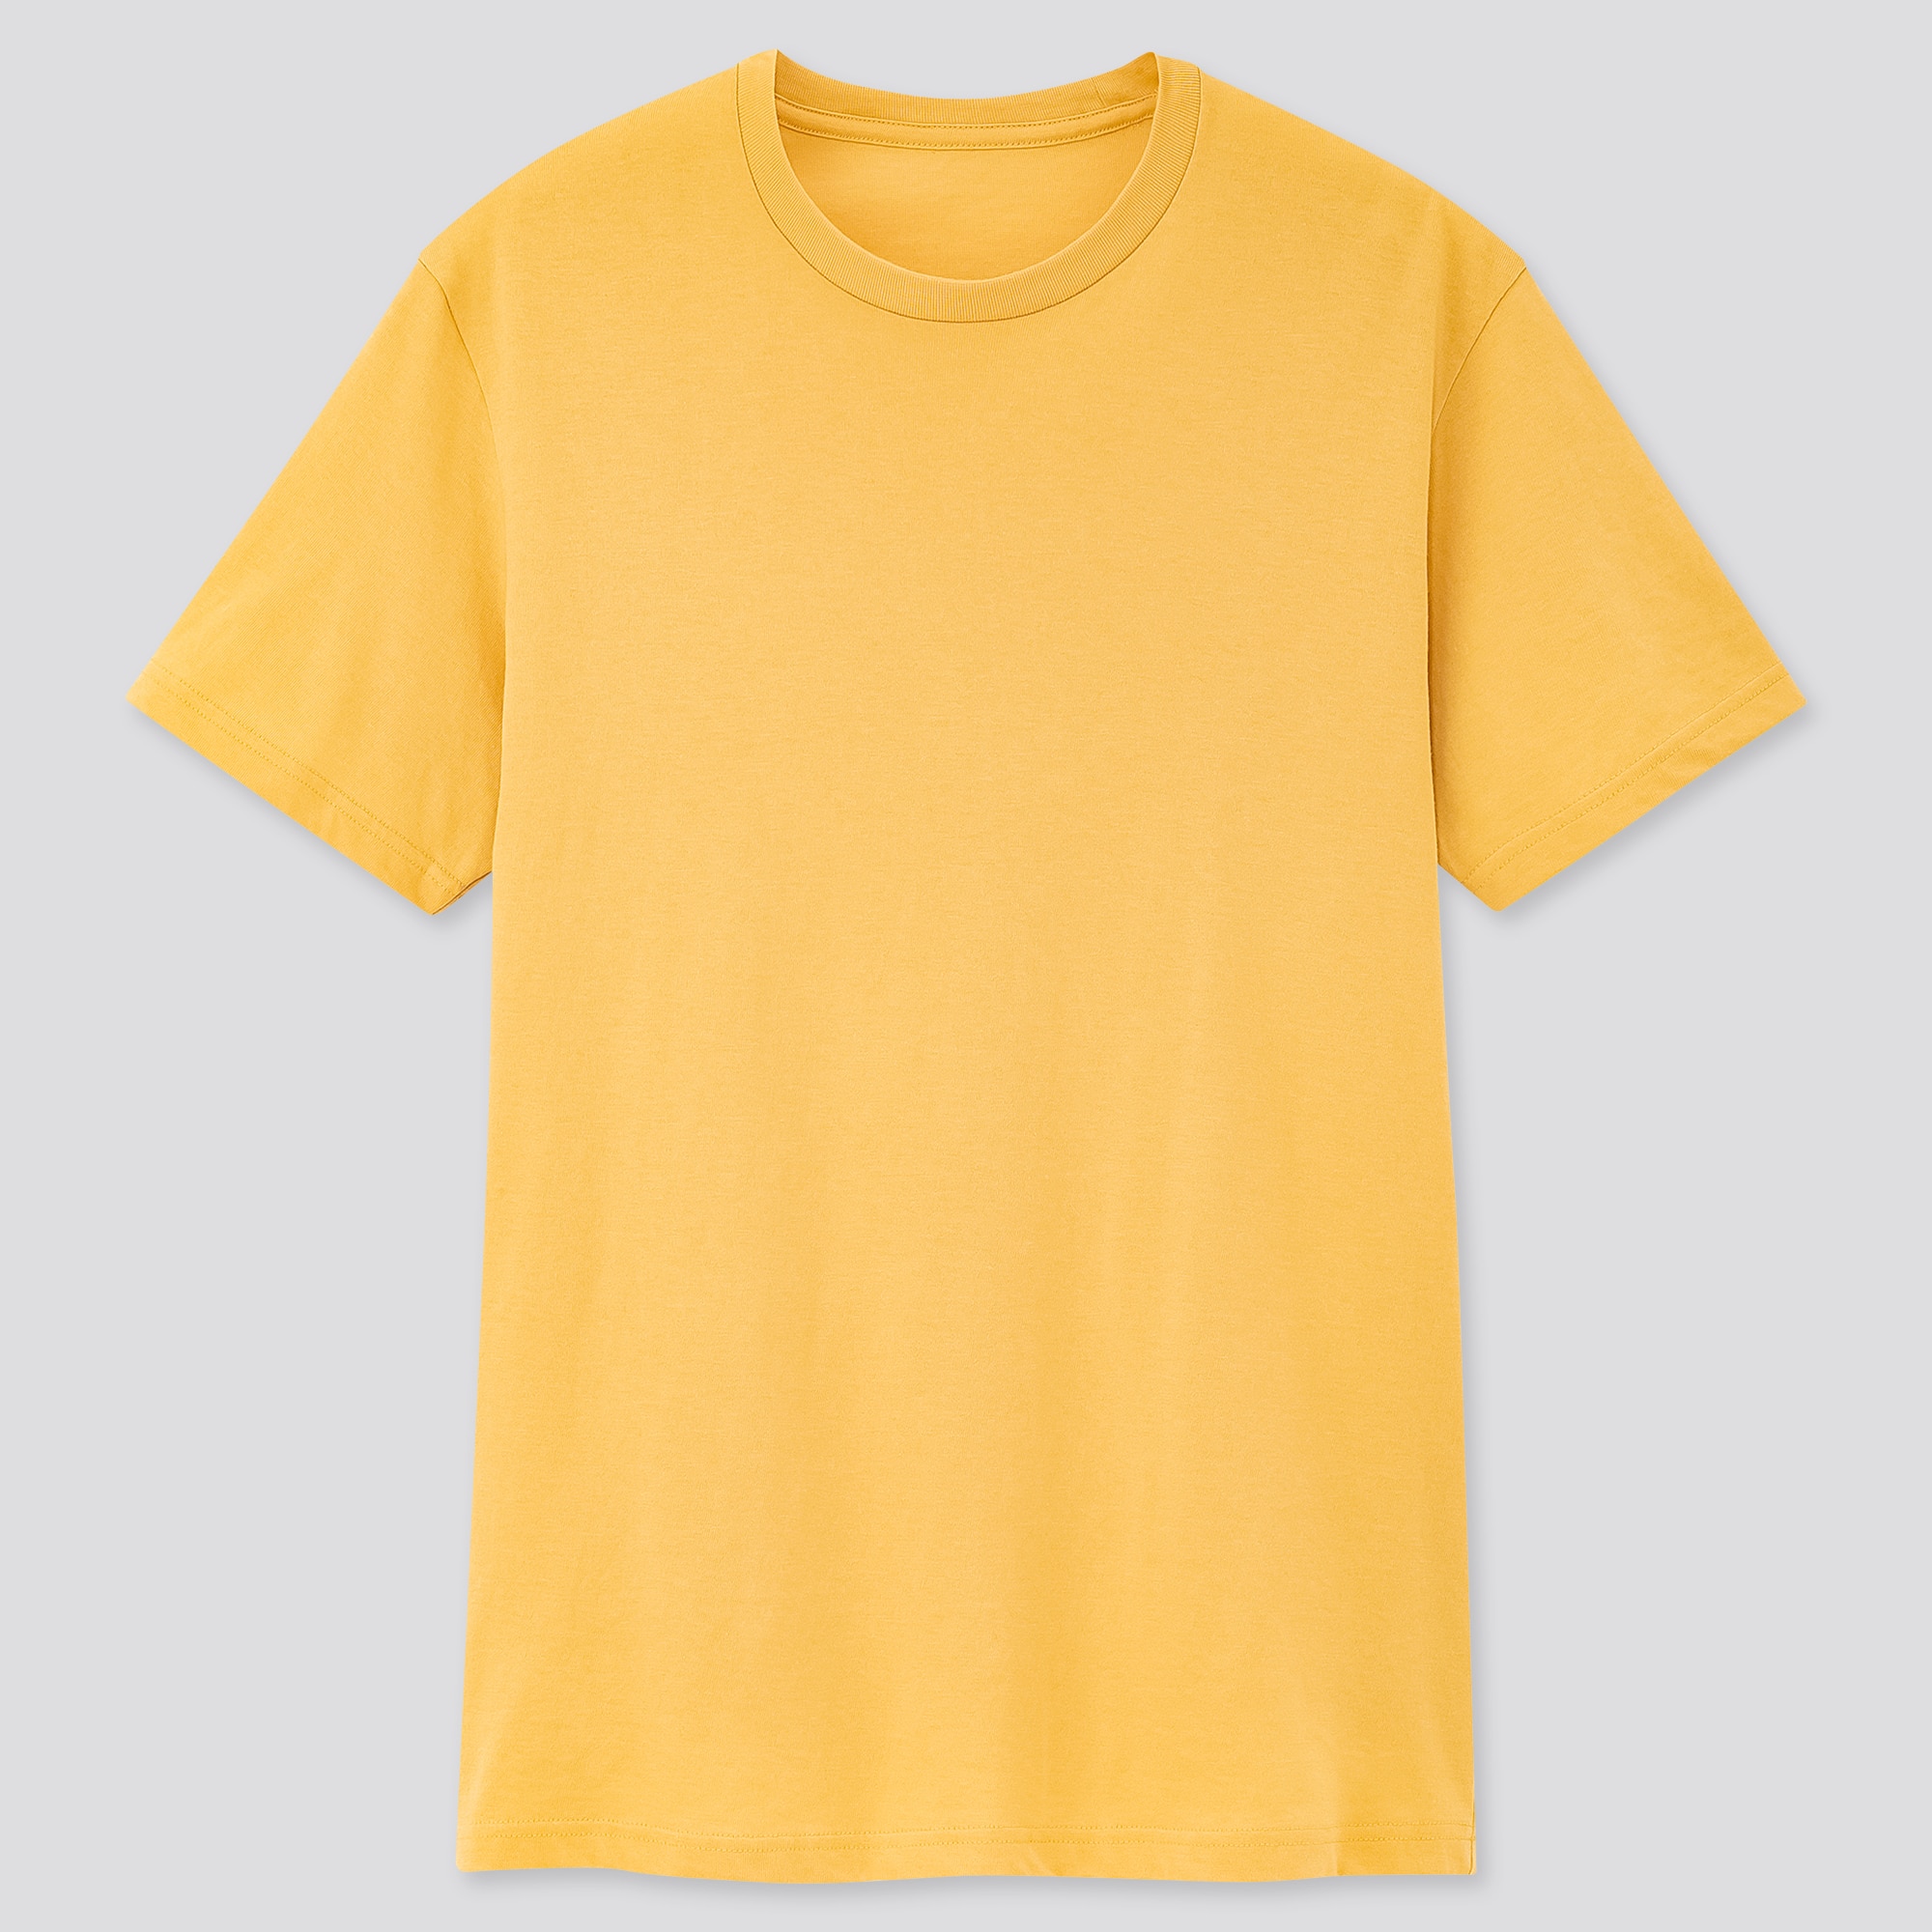 Uniqlo yellow Linen gingham shirt-Uniqlo olive paperbag shorts-Uniqlo Airism  bratop-White Cat eye sunglasses ZERO U…